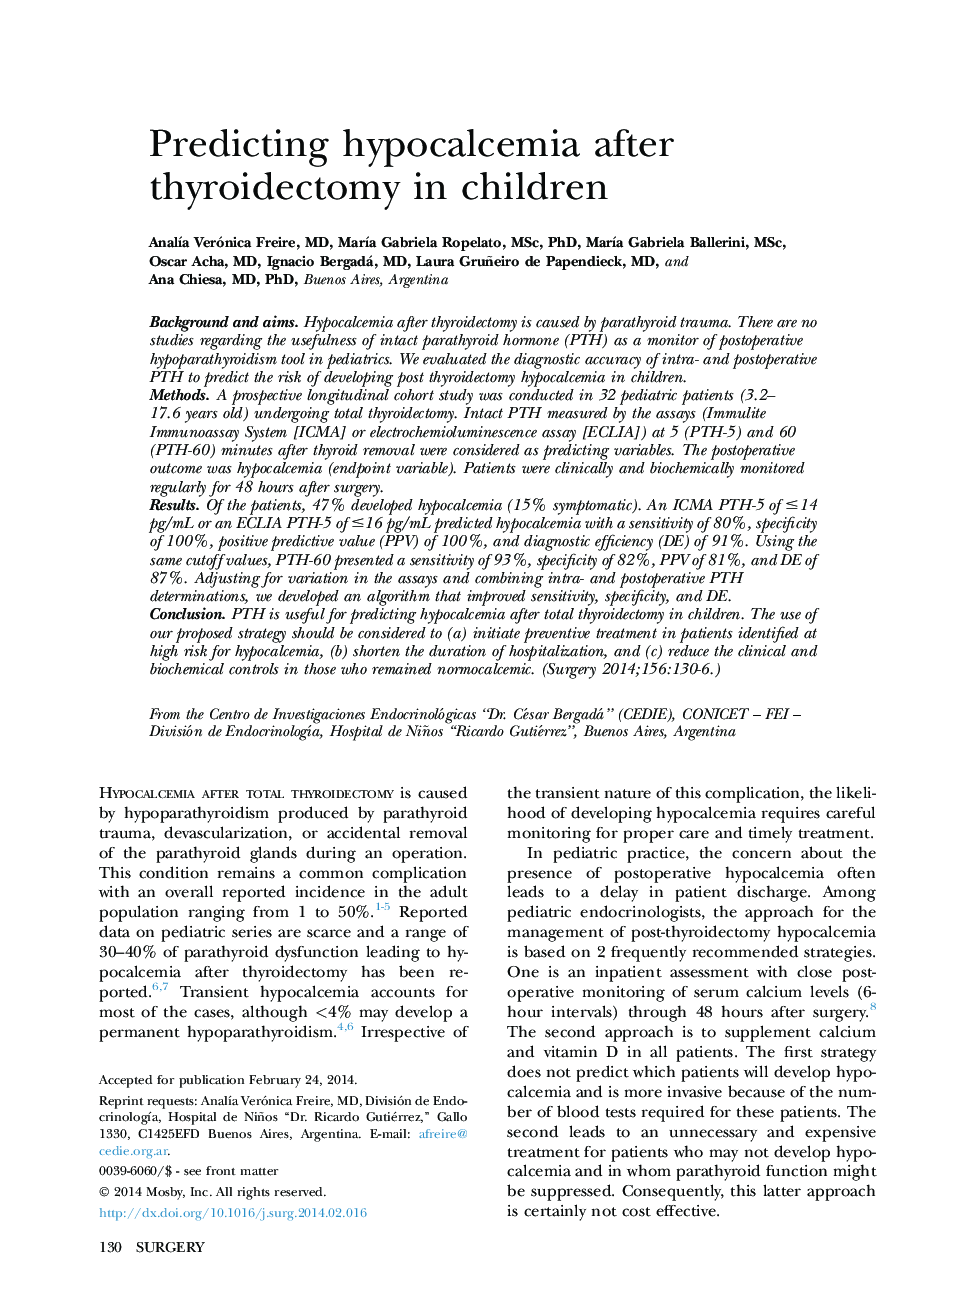 پیش بینی هیپوکلسمی پس از تیروئیدکتومی در کودکان 